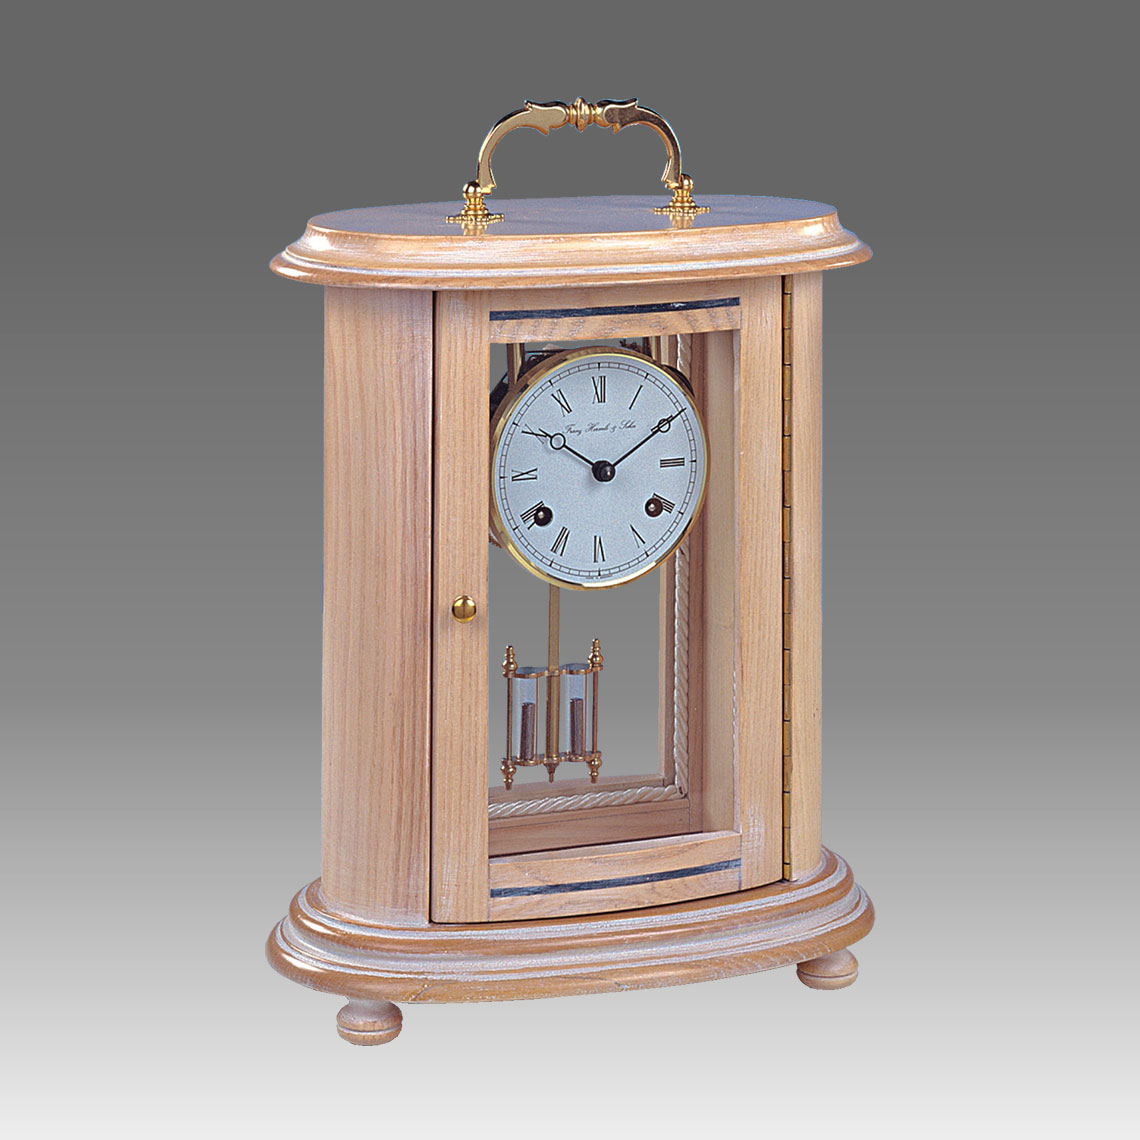 Mante Clock, Table Clock, Cimn Clock, Art.322/4 de cape white - Bim Bam melody on Bells, white round dial